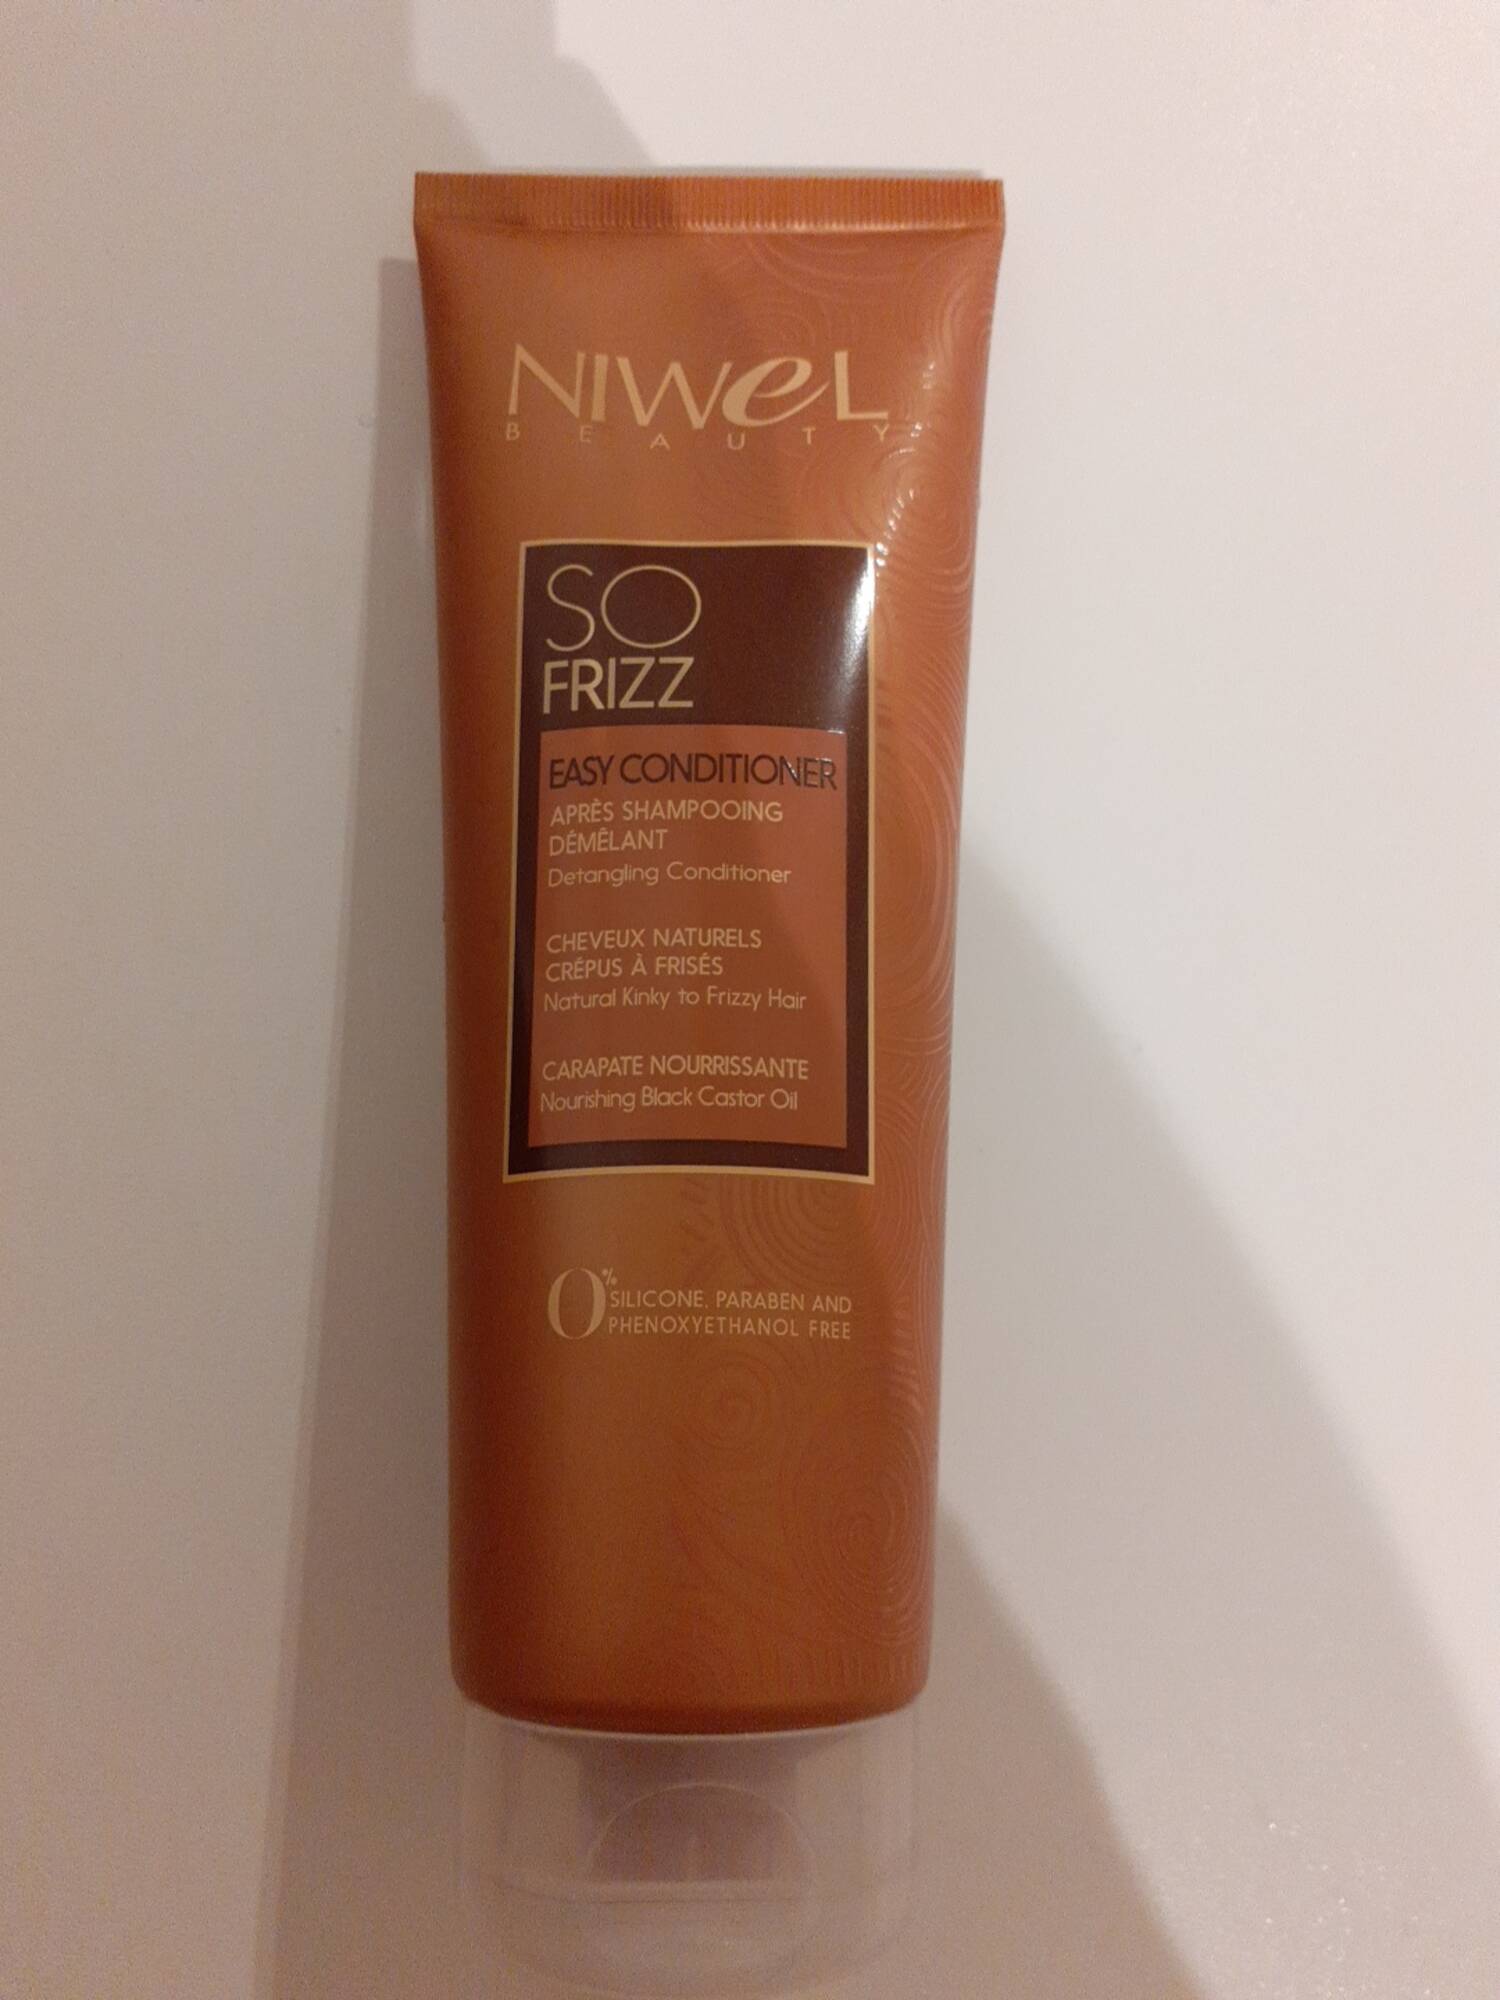 NIWEL - So frizz - Après-shampooing démêlant